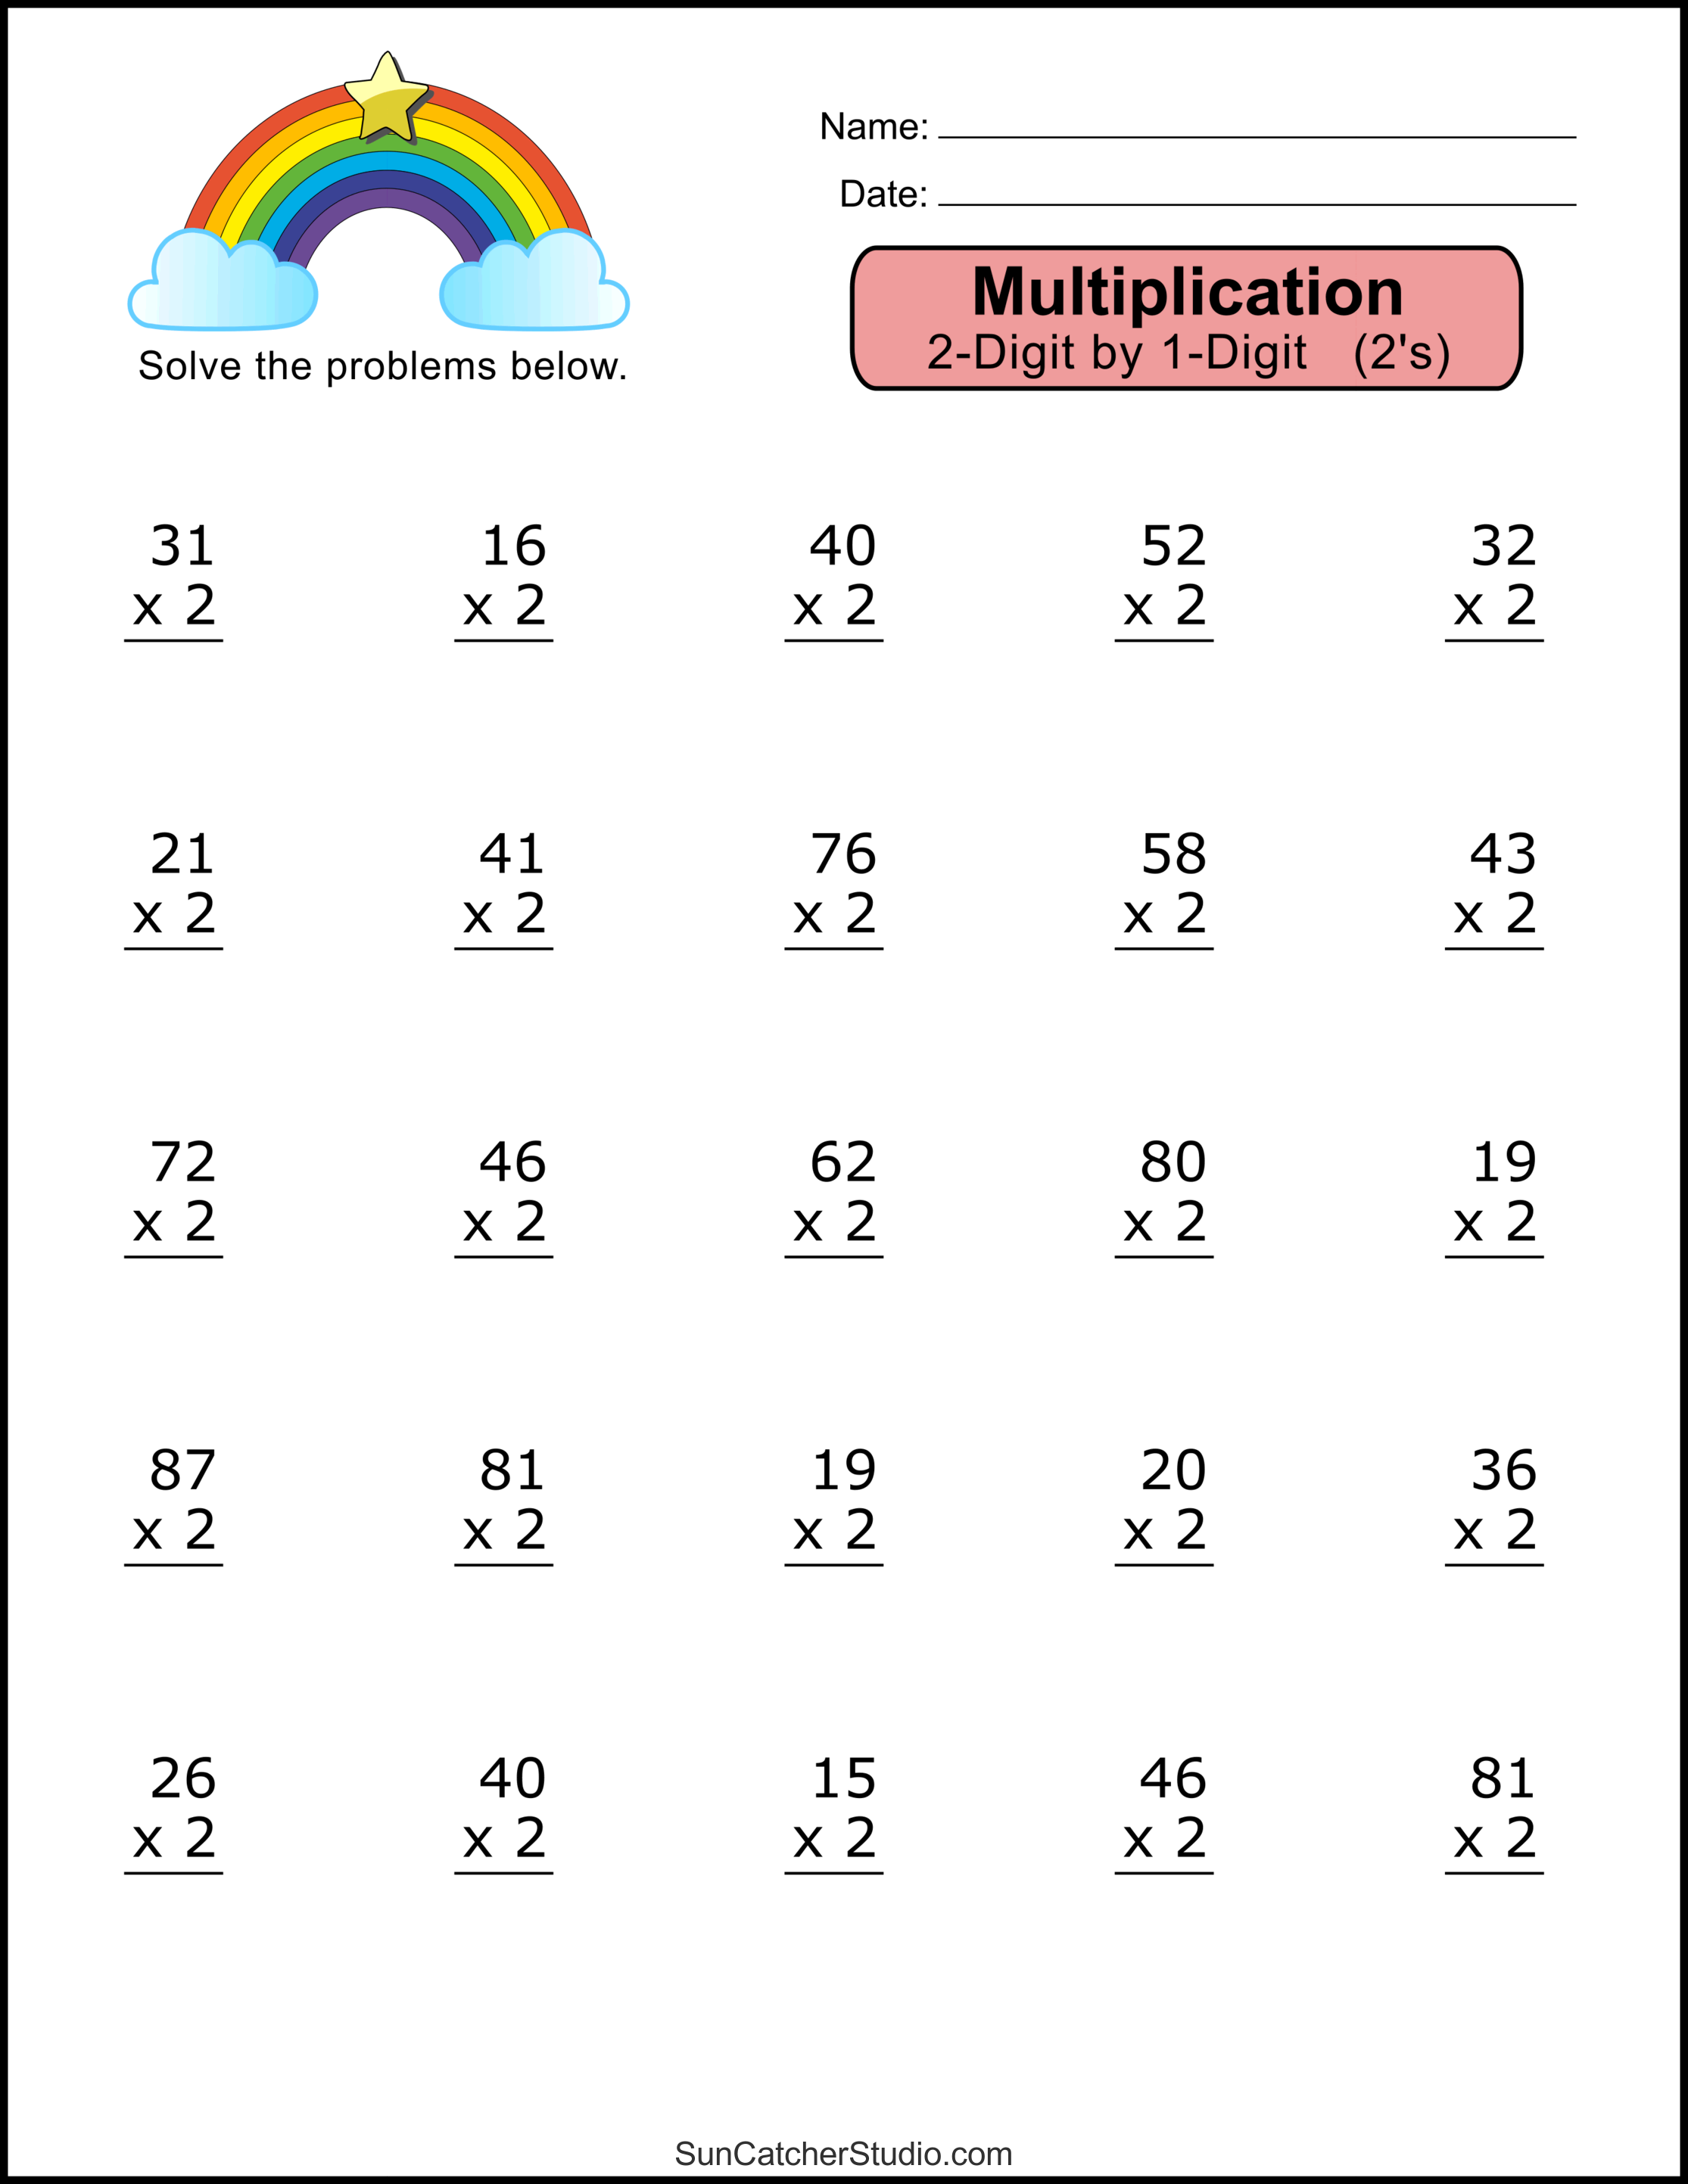 5 printable multiplication worksheets for grade 2 in pdf - multiplication worksheets 2 digit by 1 digit math drills diy | multiplication worksheets pdf grade 2